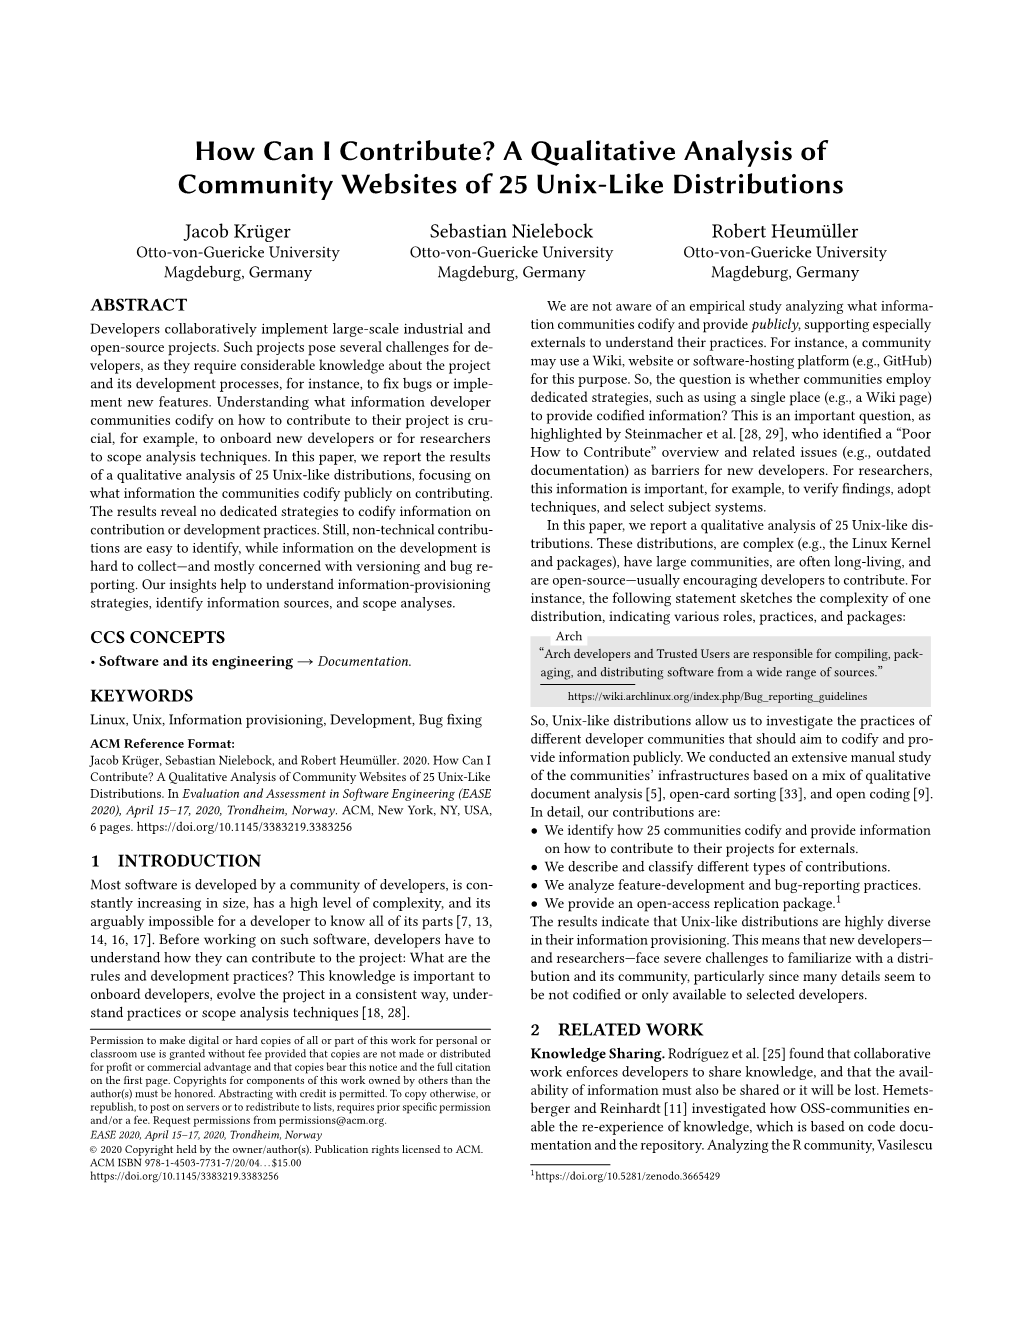 A Qualitative Analysis of Community Websites of 25 Unix-Like Distributions